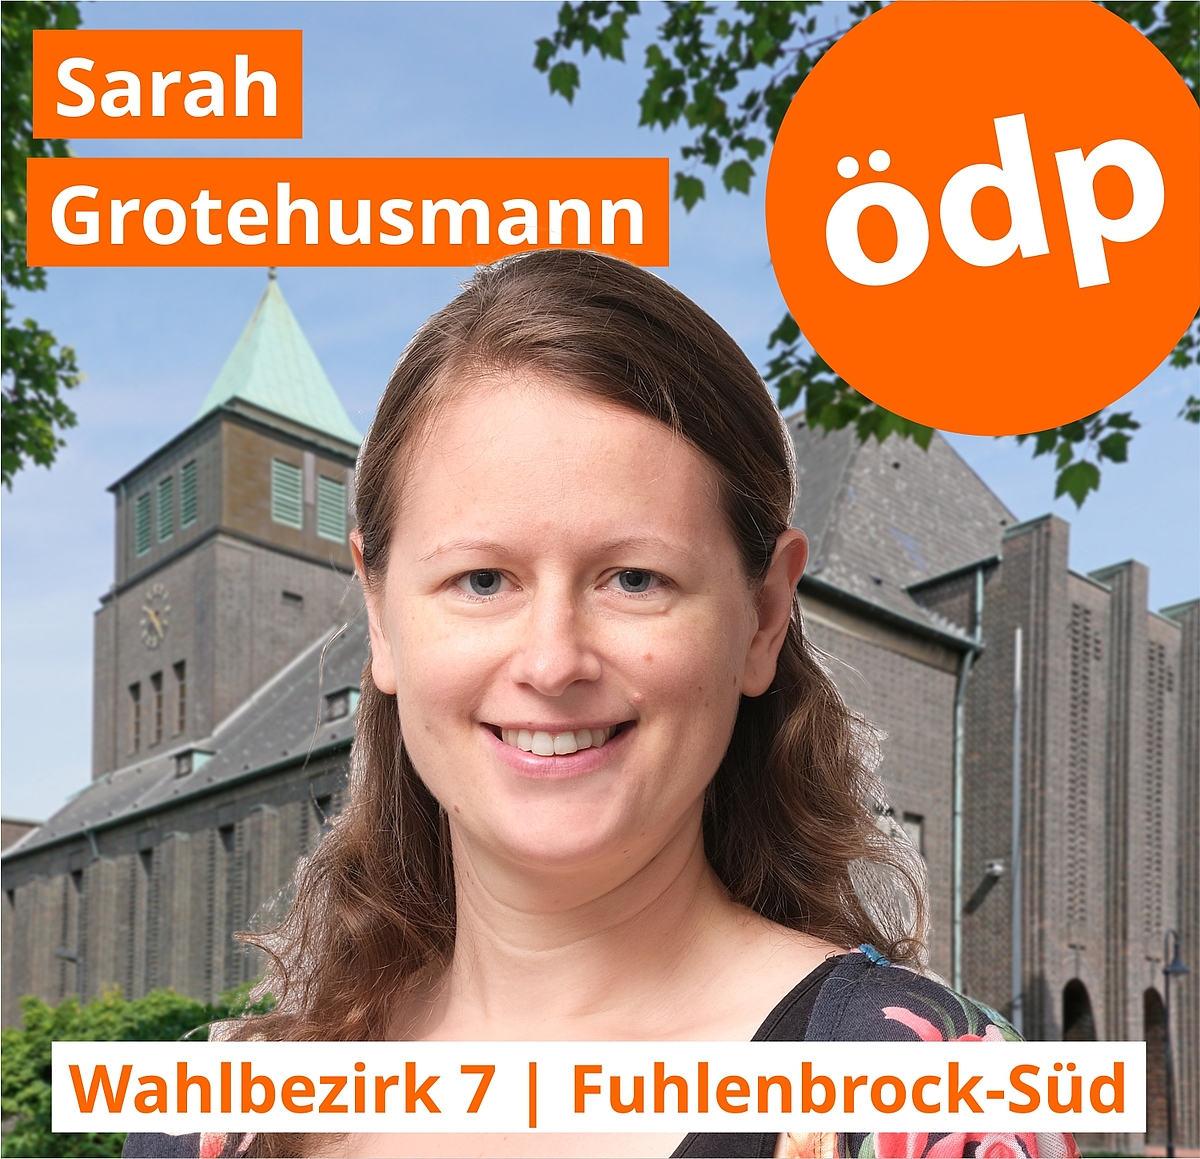 Sarah Grotehusmann | Wahlbezirk 7 | Fuhlenbrock-Süd